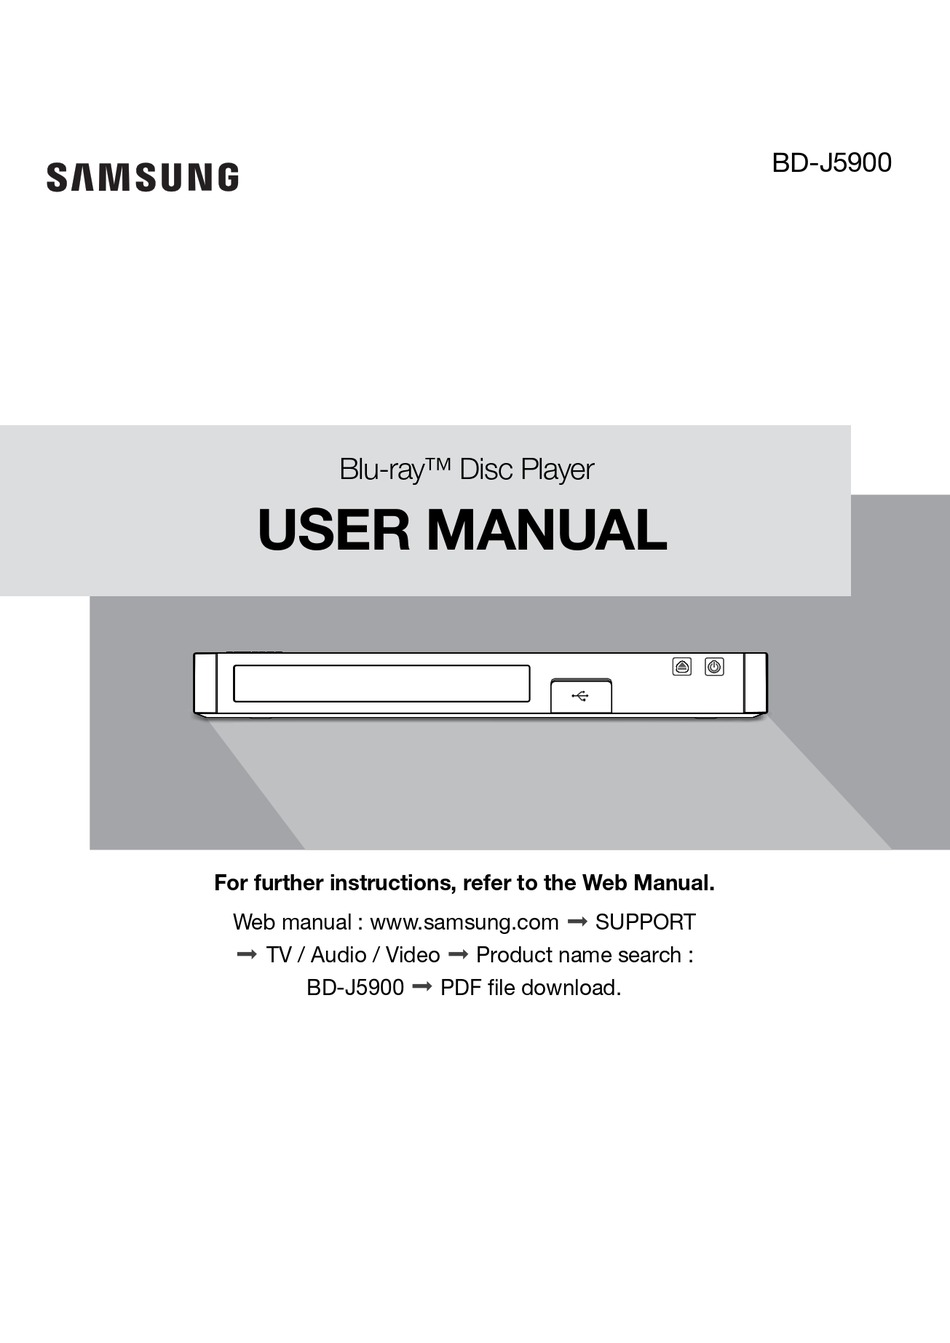 SAMSUNG BD-J5900 USER MANUAL Pdf Download | ManualsLib